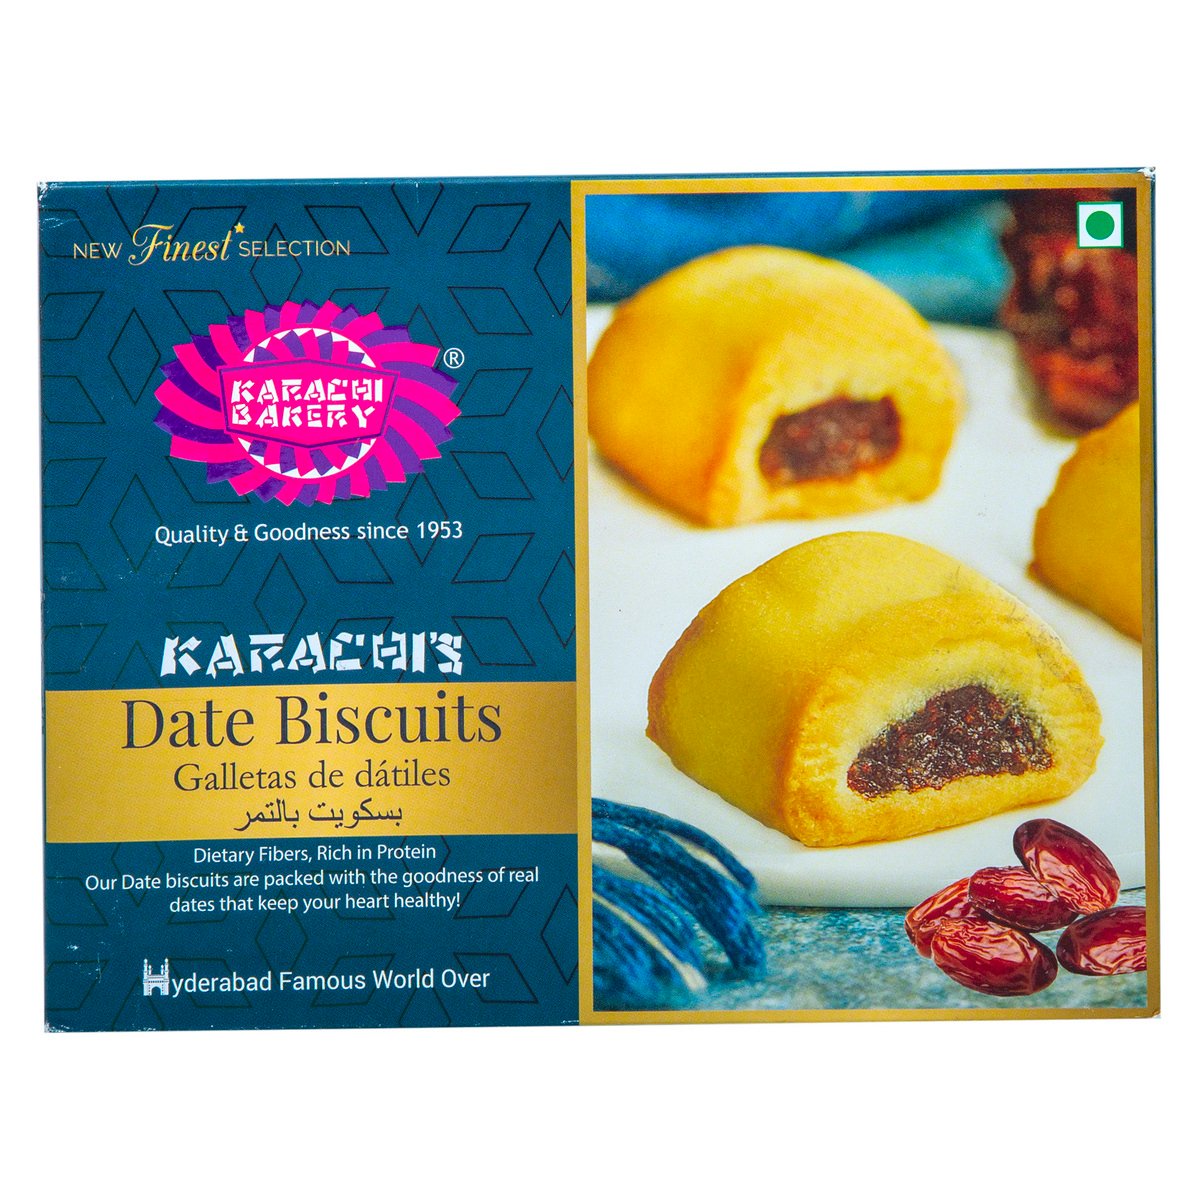 Karachi Bakery Date Biscuits 300g